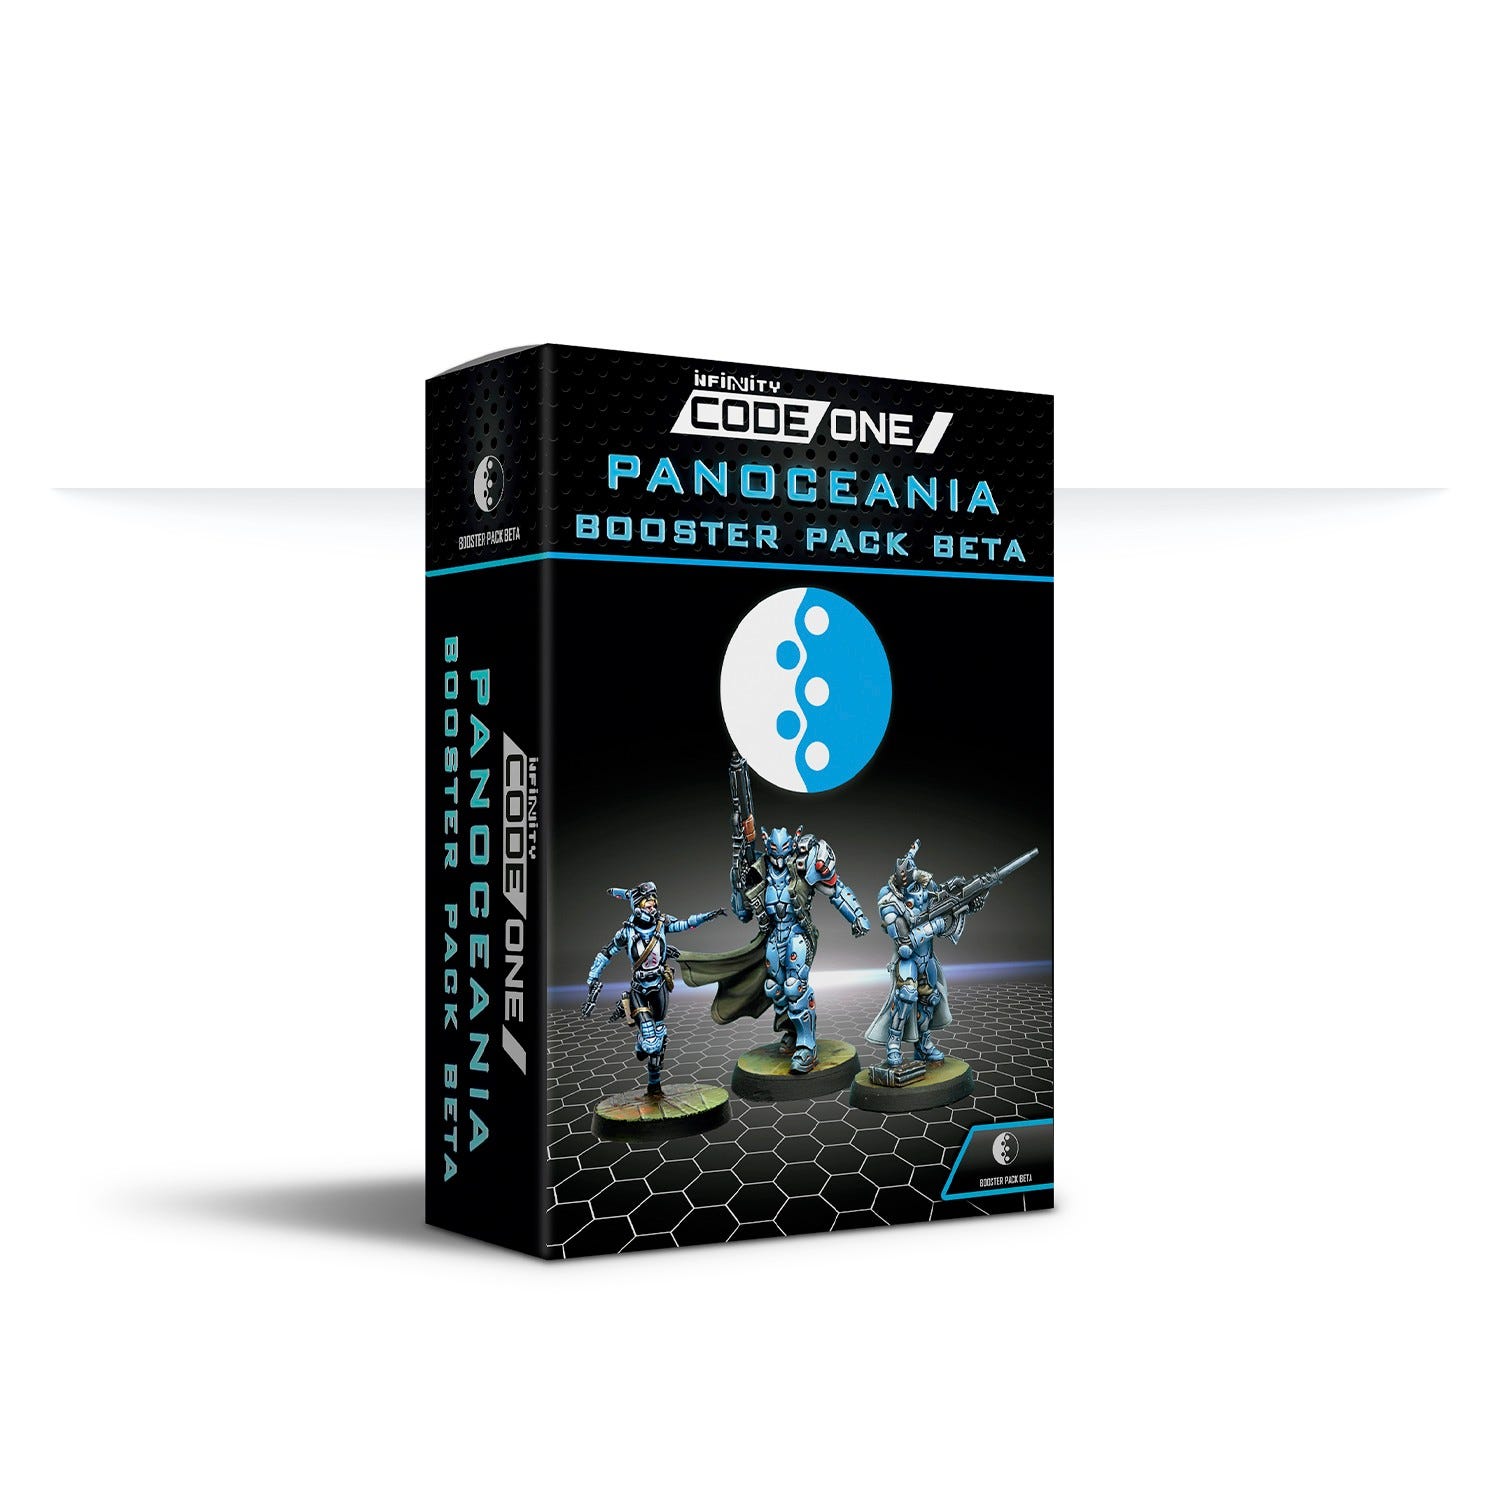 Panoceania Booster Pack Beta Box